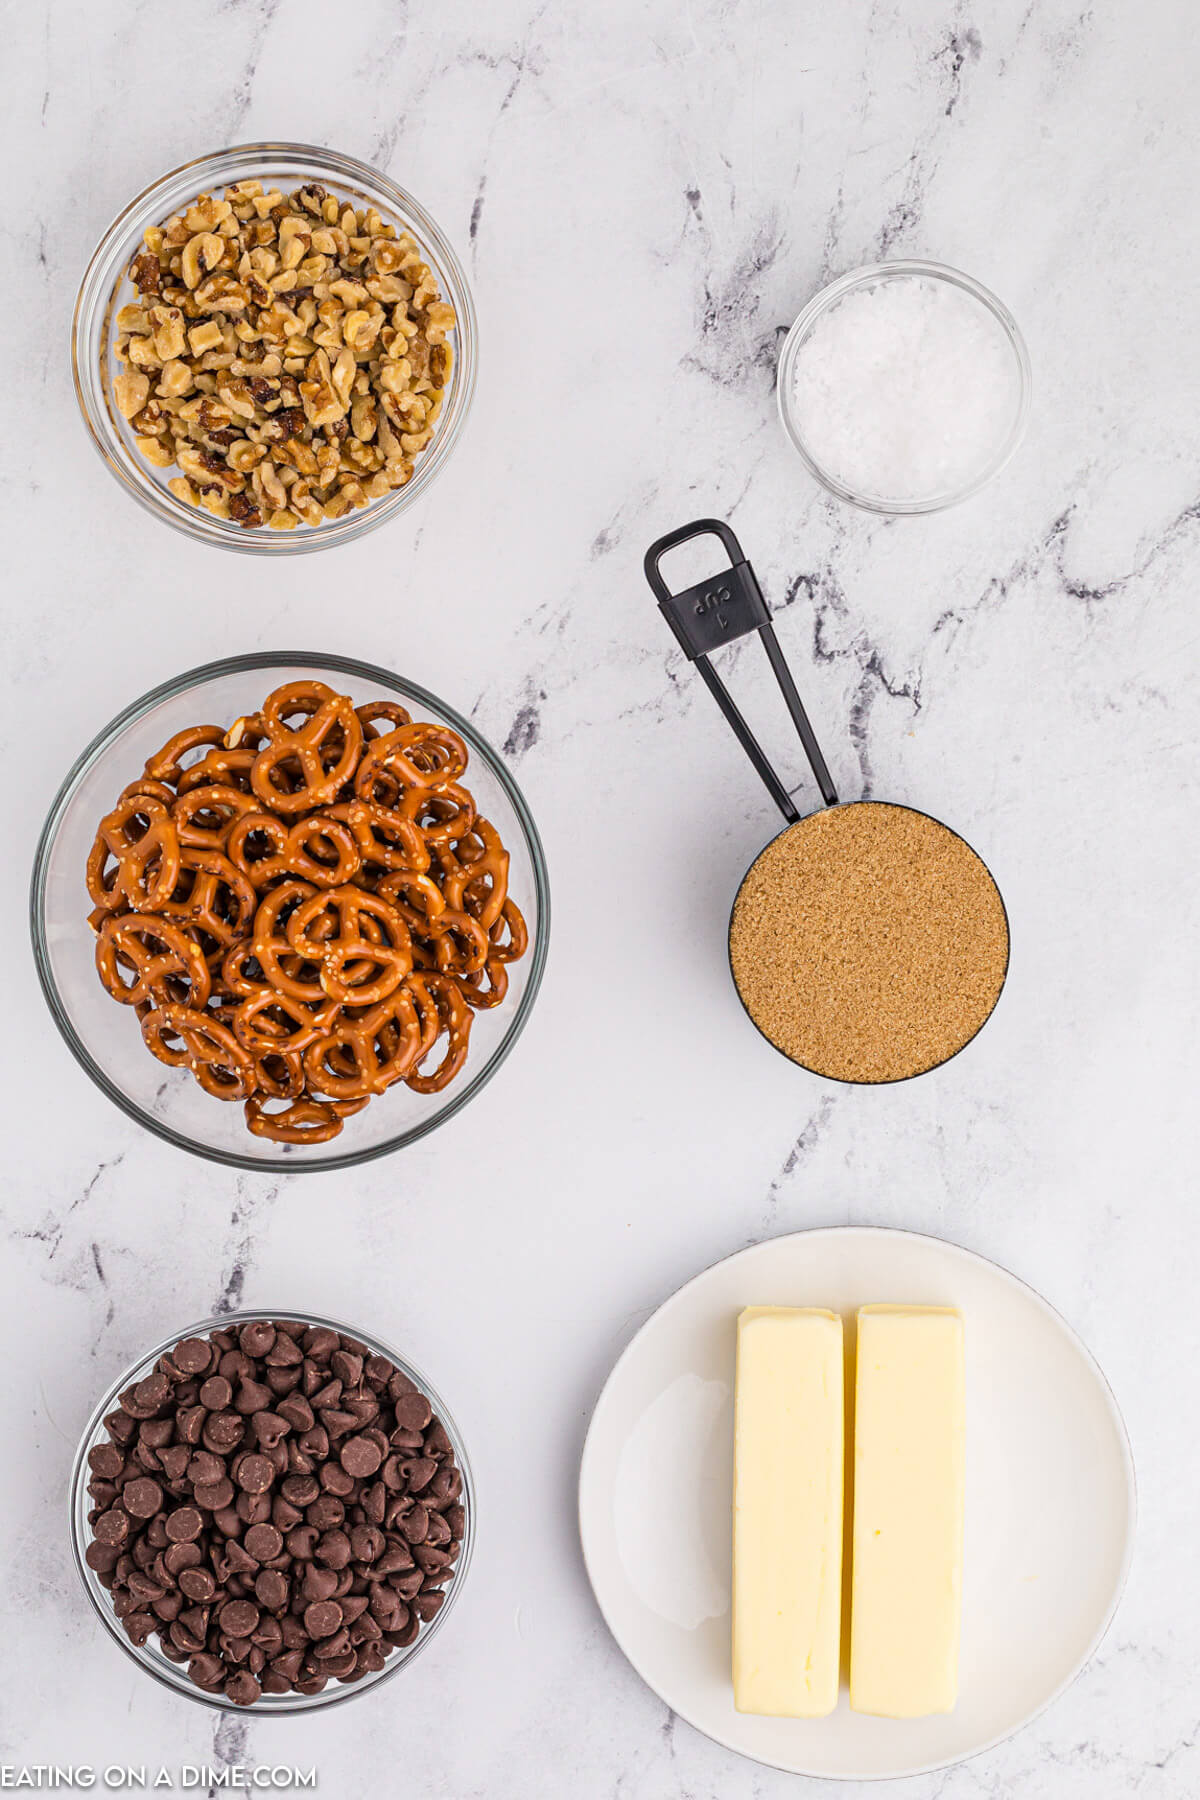 Pretzel Toffee Ingredients - Mini Pretzels, butter, brown sugar, chocolate chips, walnuts, sea salt